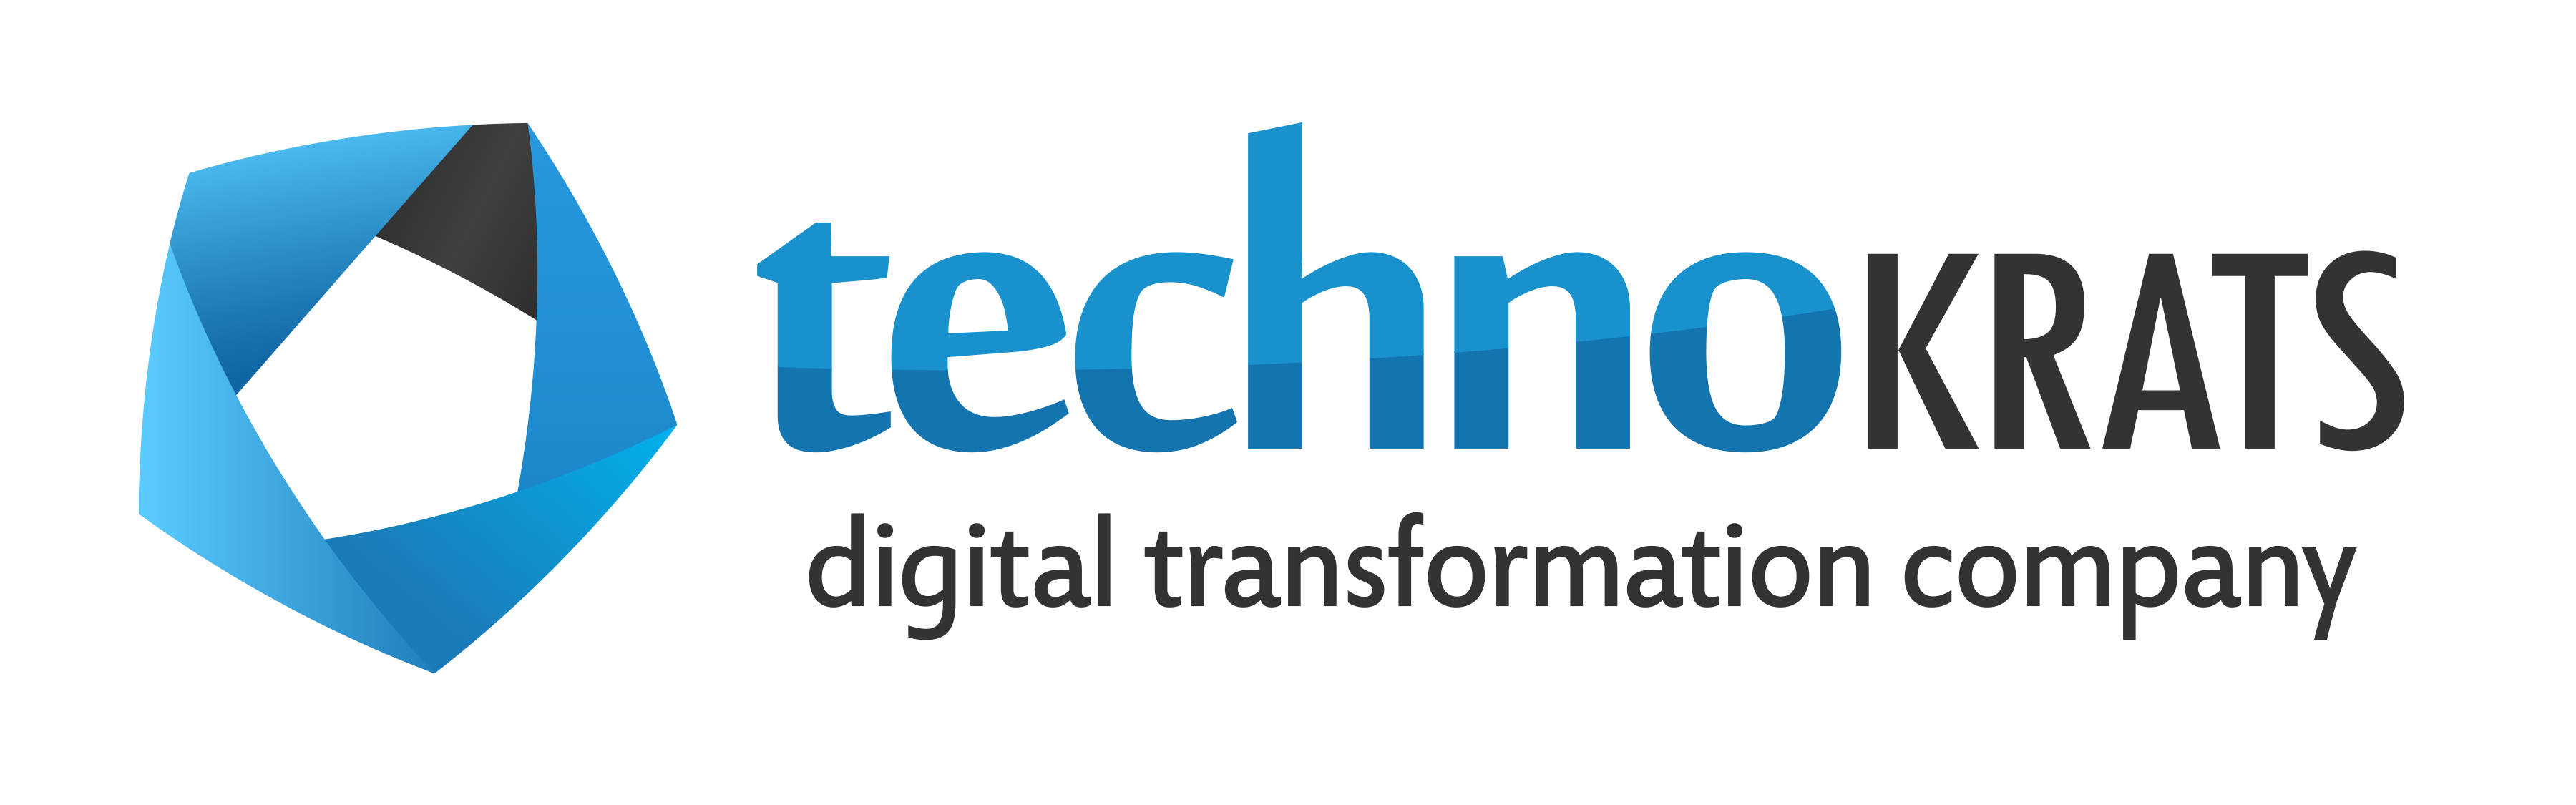 technokrats-digital-transformation-company_logo_3600w-transparent